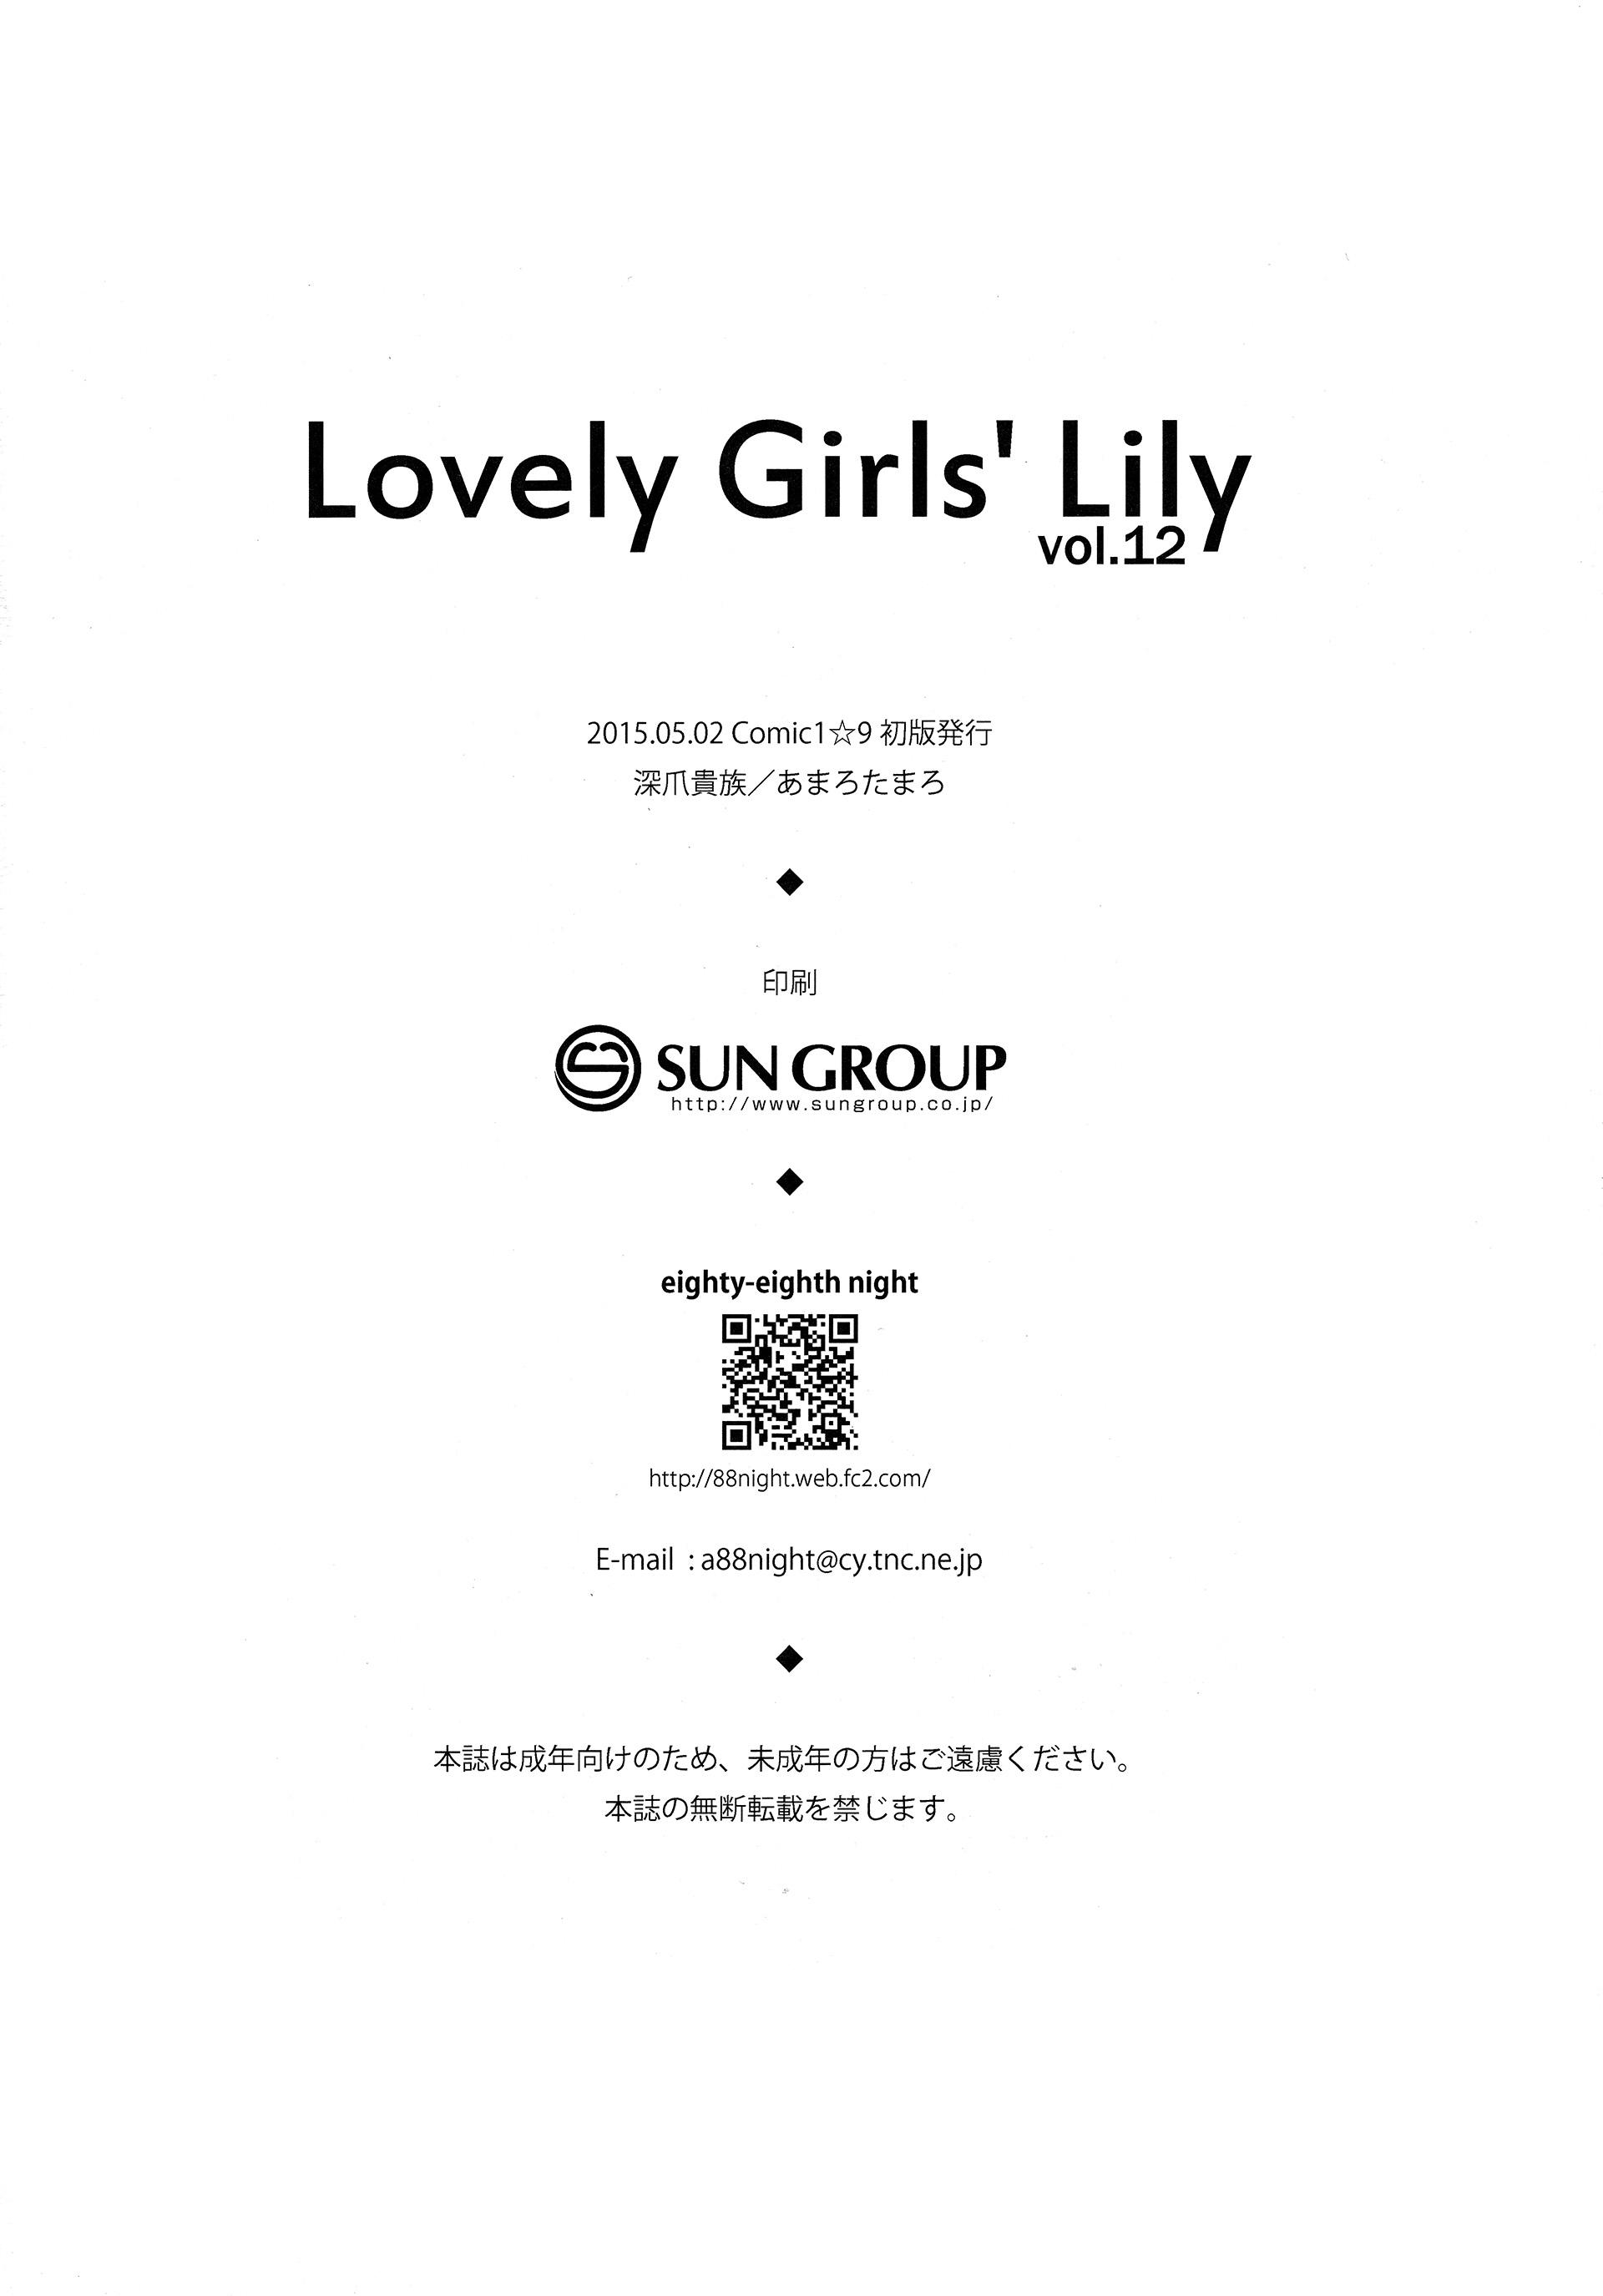 LGL Lovely Girls' Lily vol. 12 21